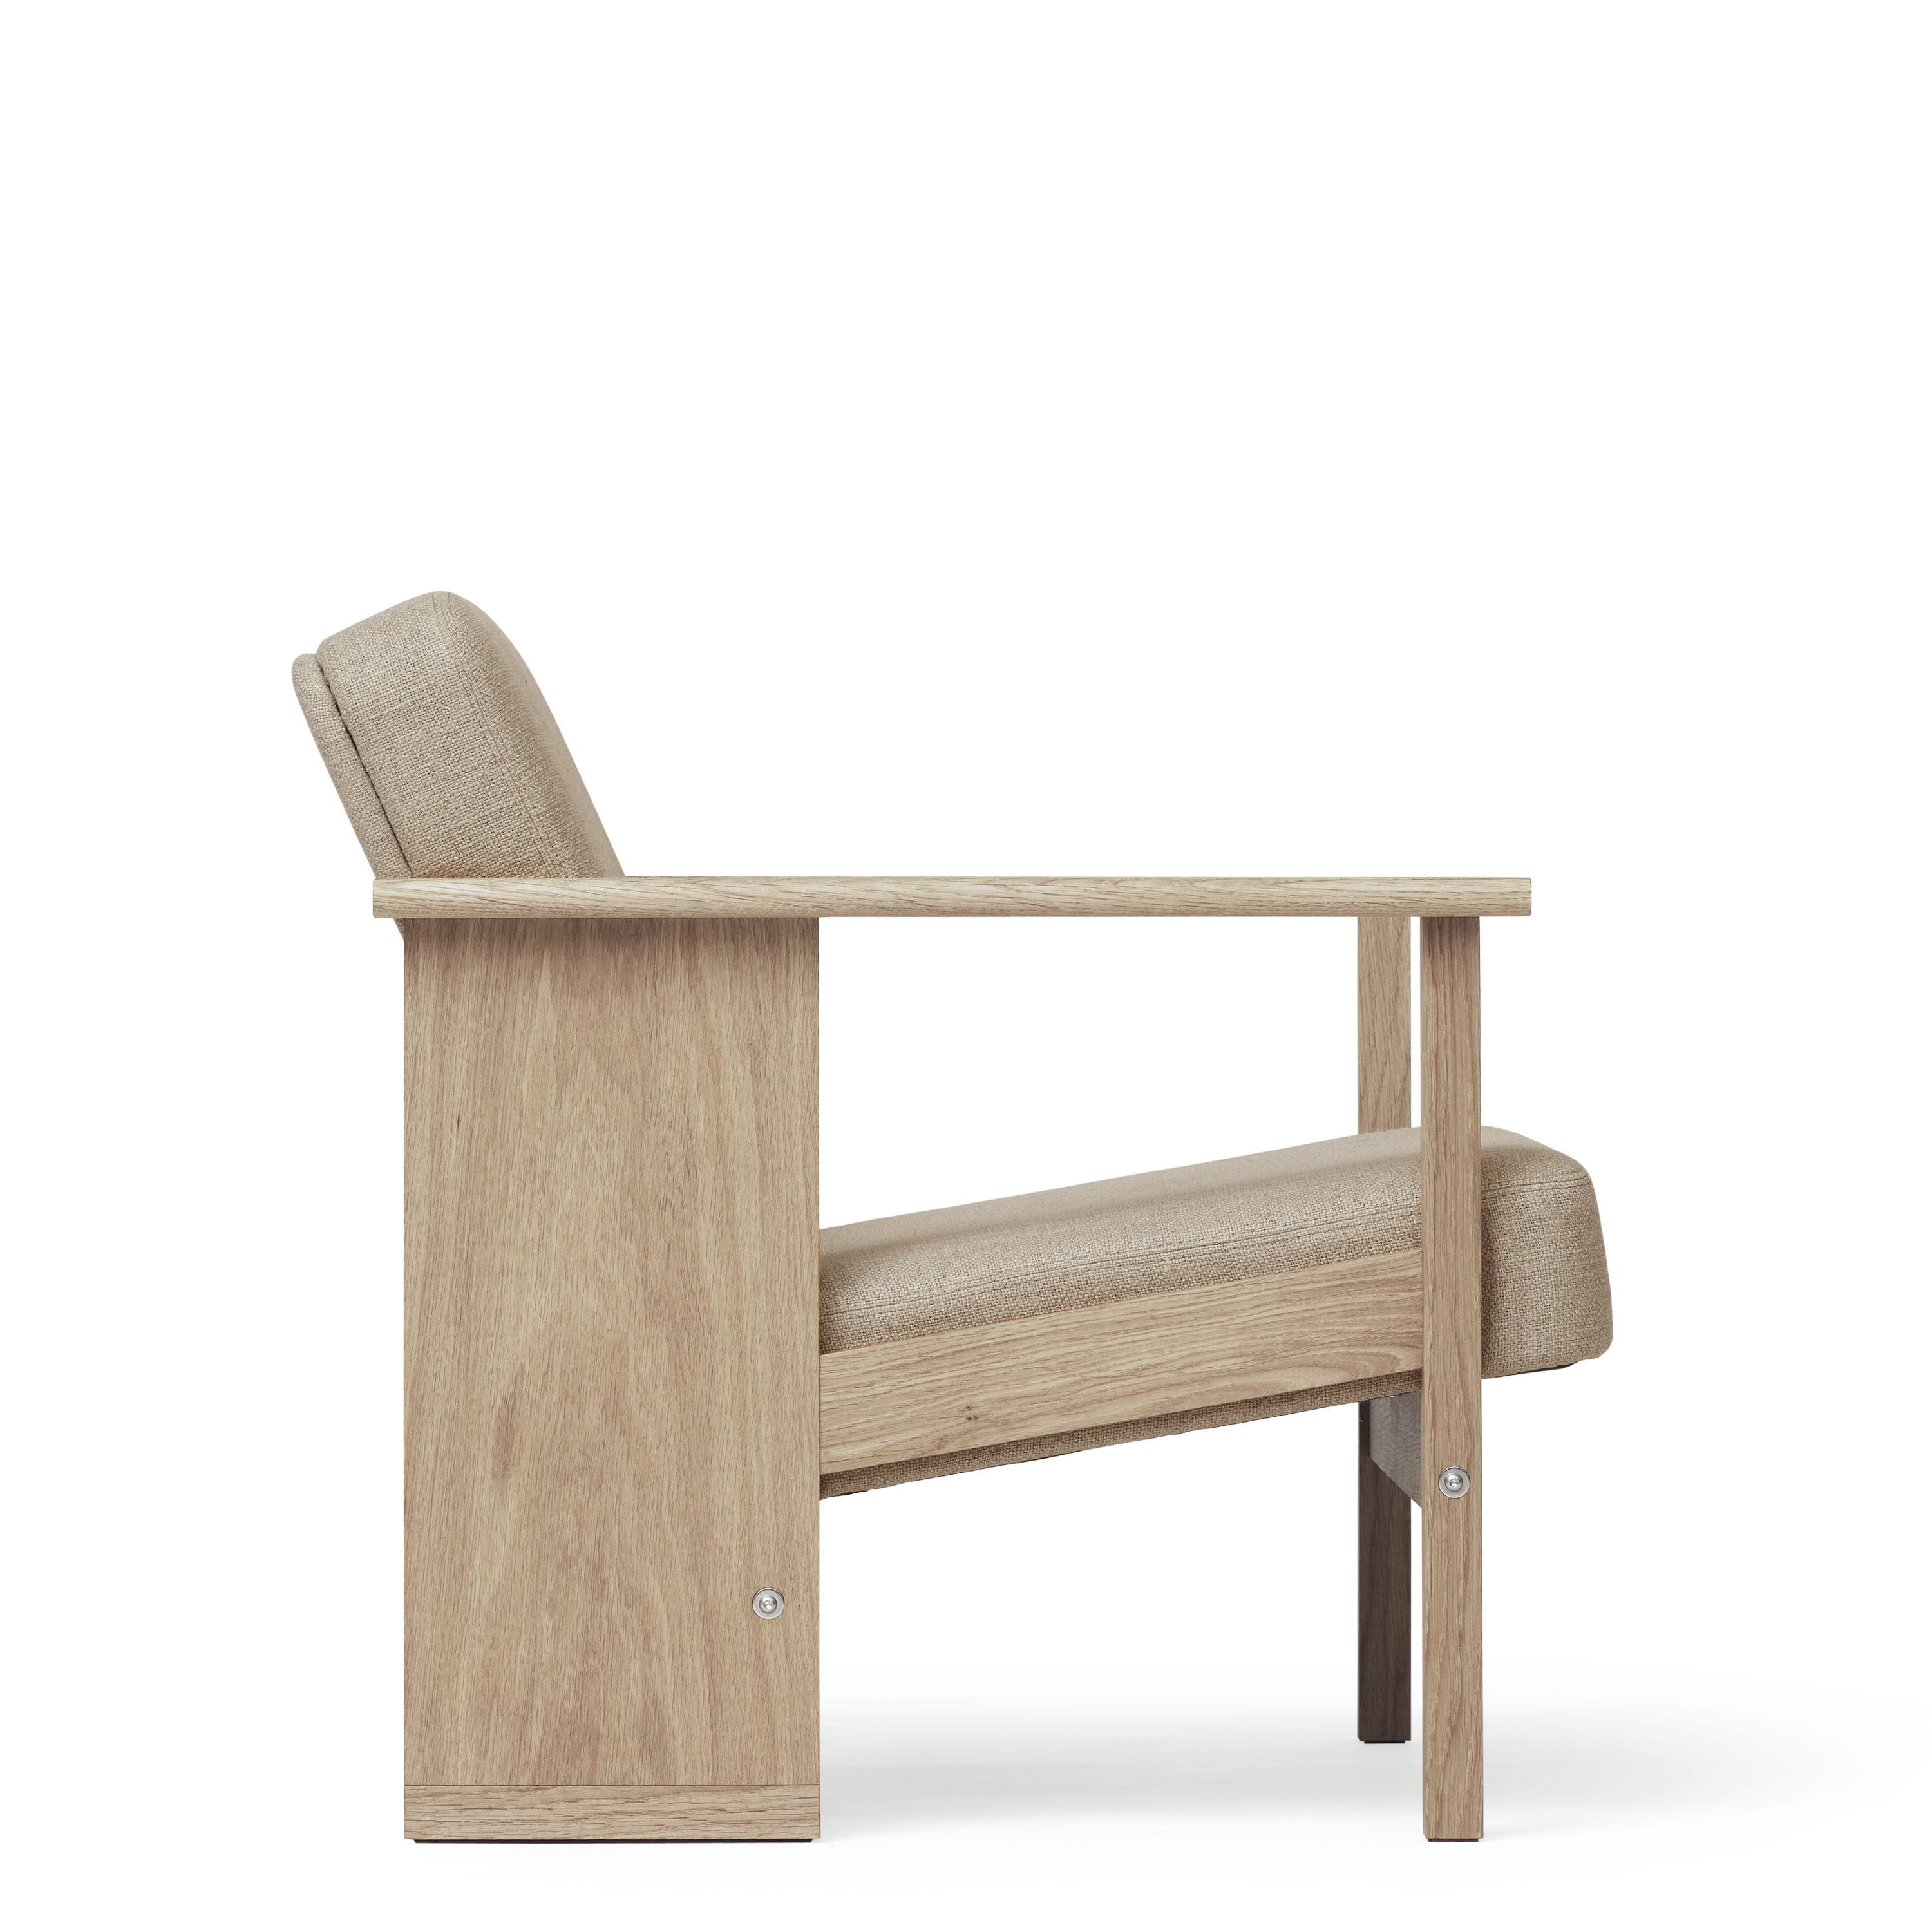 Form & Reform Block Lounge sedia. Quercia di olio bianco